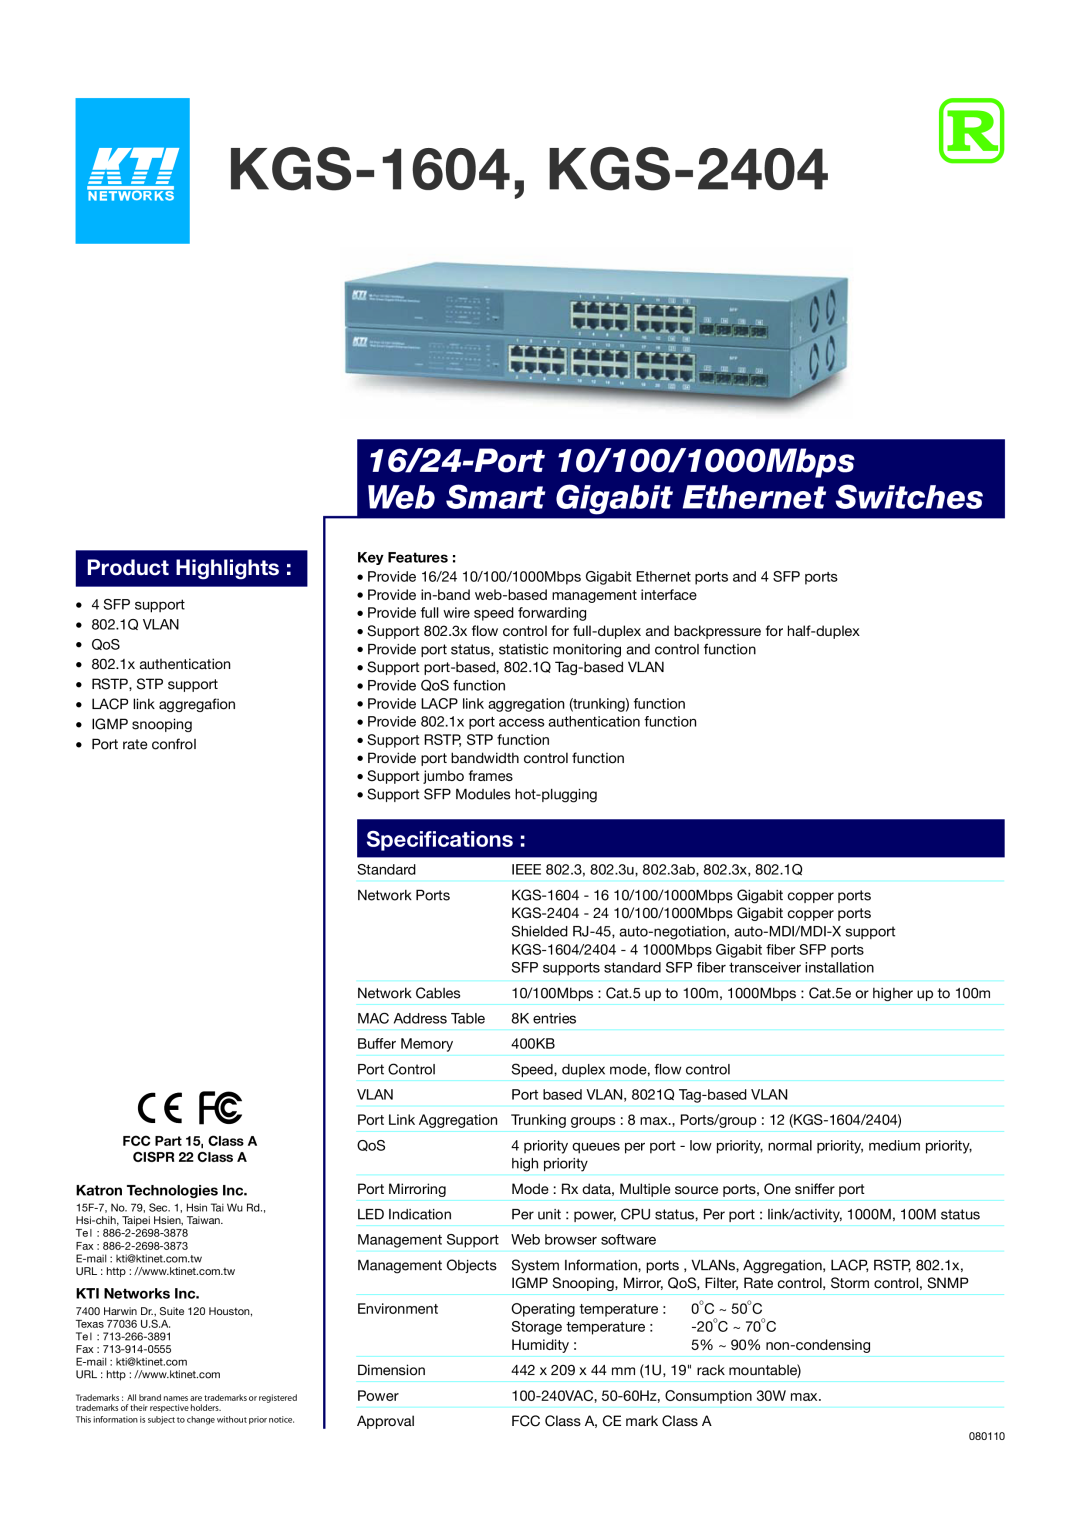 KTI Networks specifications KGS-1604, KGS-2404, 16/24-Port 10/100/1000Mbps Web Smart Gigabit Ethernet Switches 